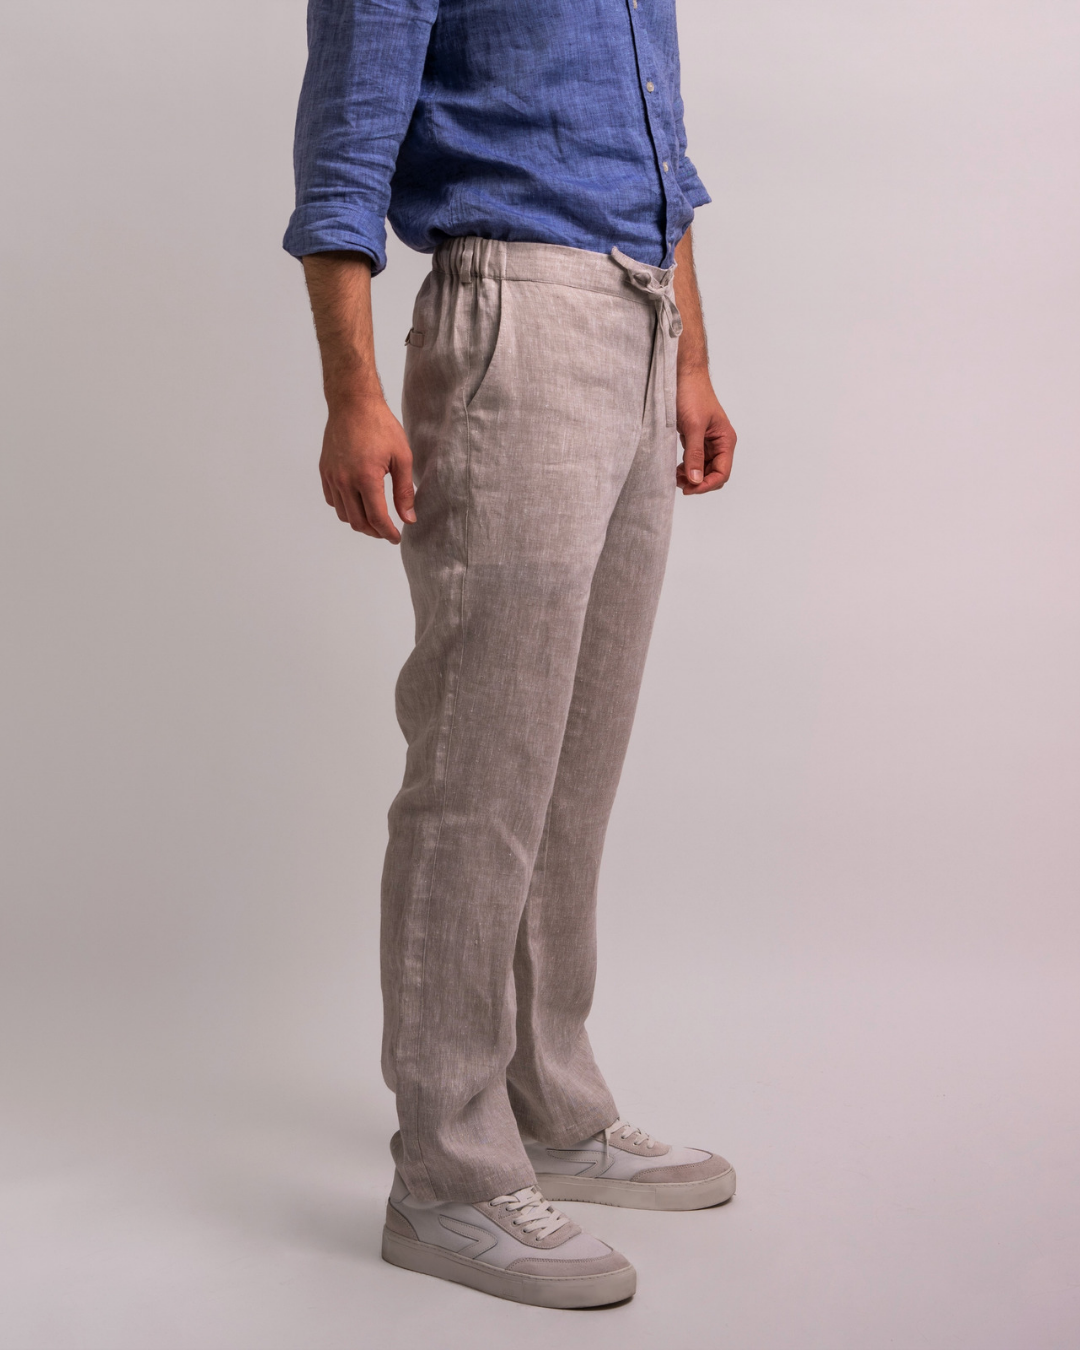 Linen trousers for men in natural linen colour